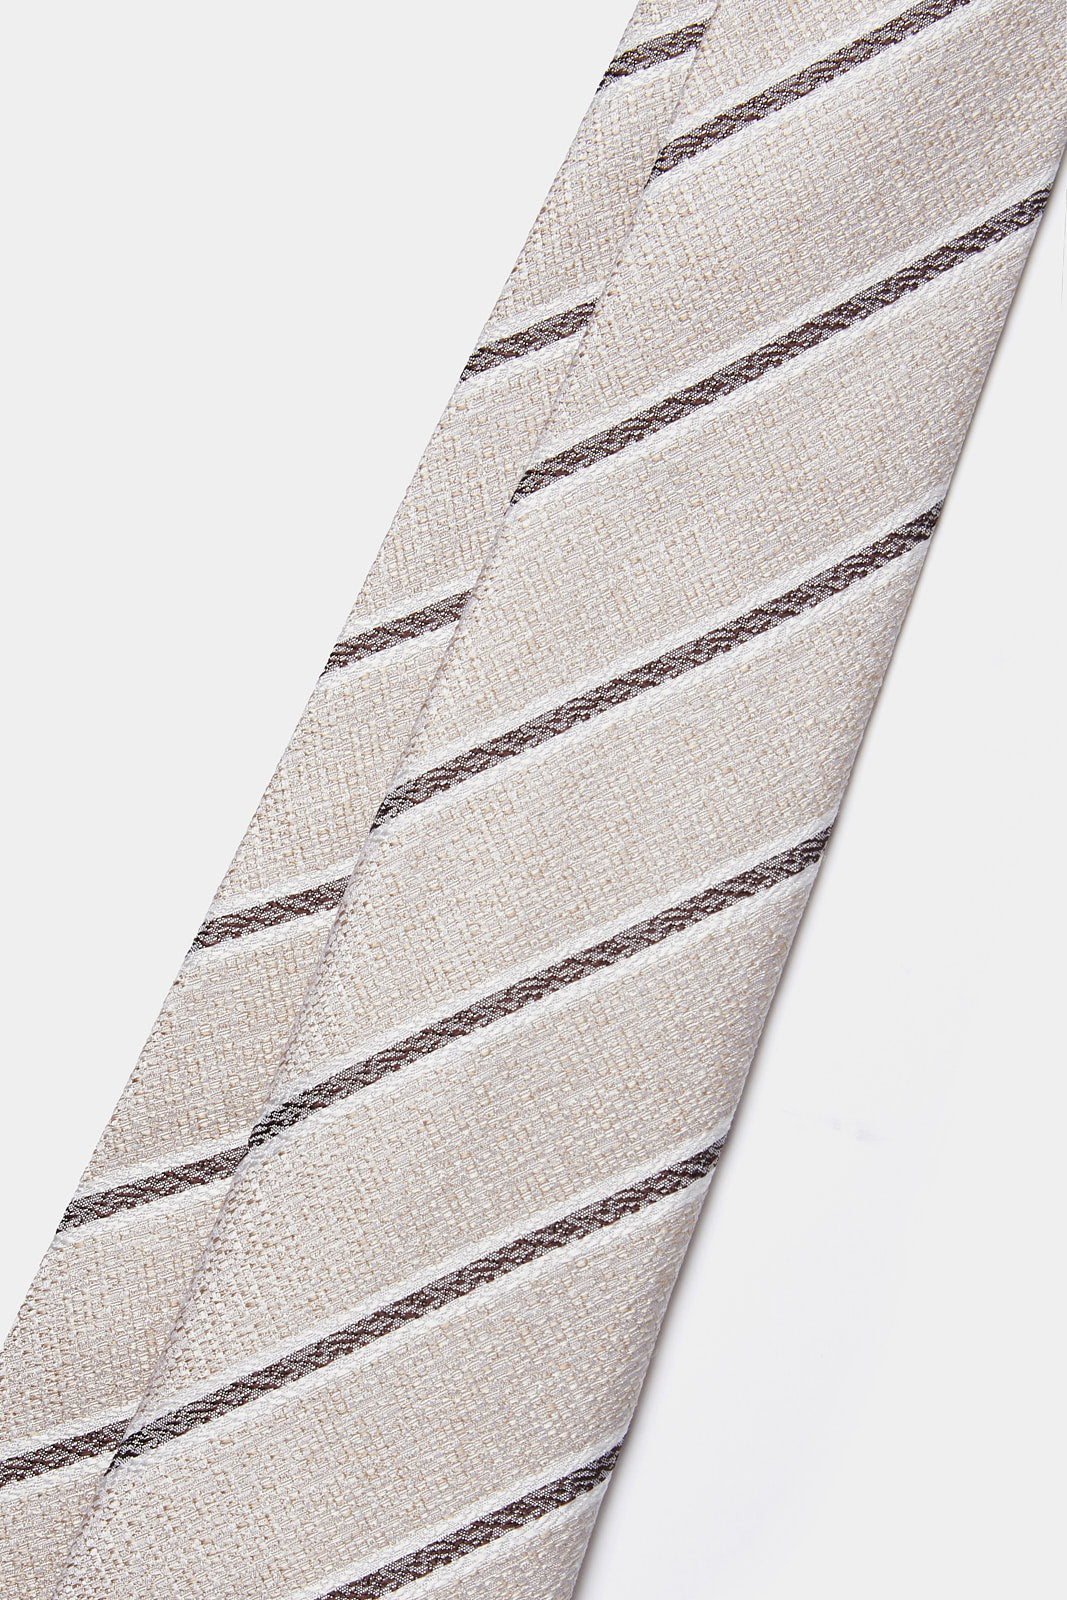 100% Silk Two Tone Stripe Tie in Warm Sand